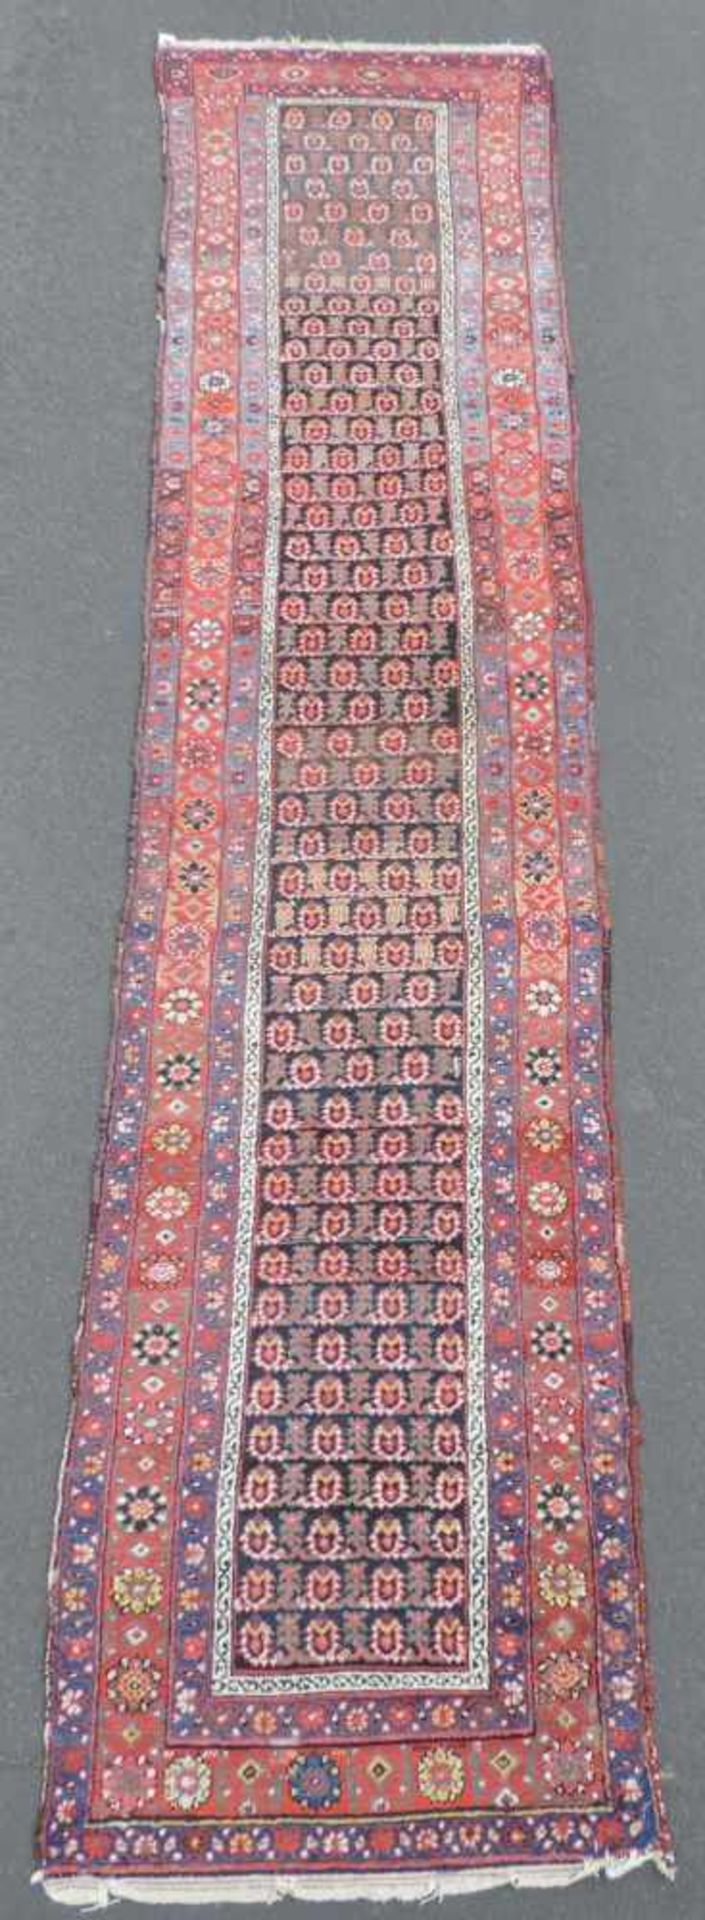 Nahawand Persian carpet. Narrow runner. Iran. Old, around 1940.